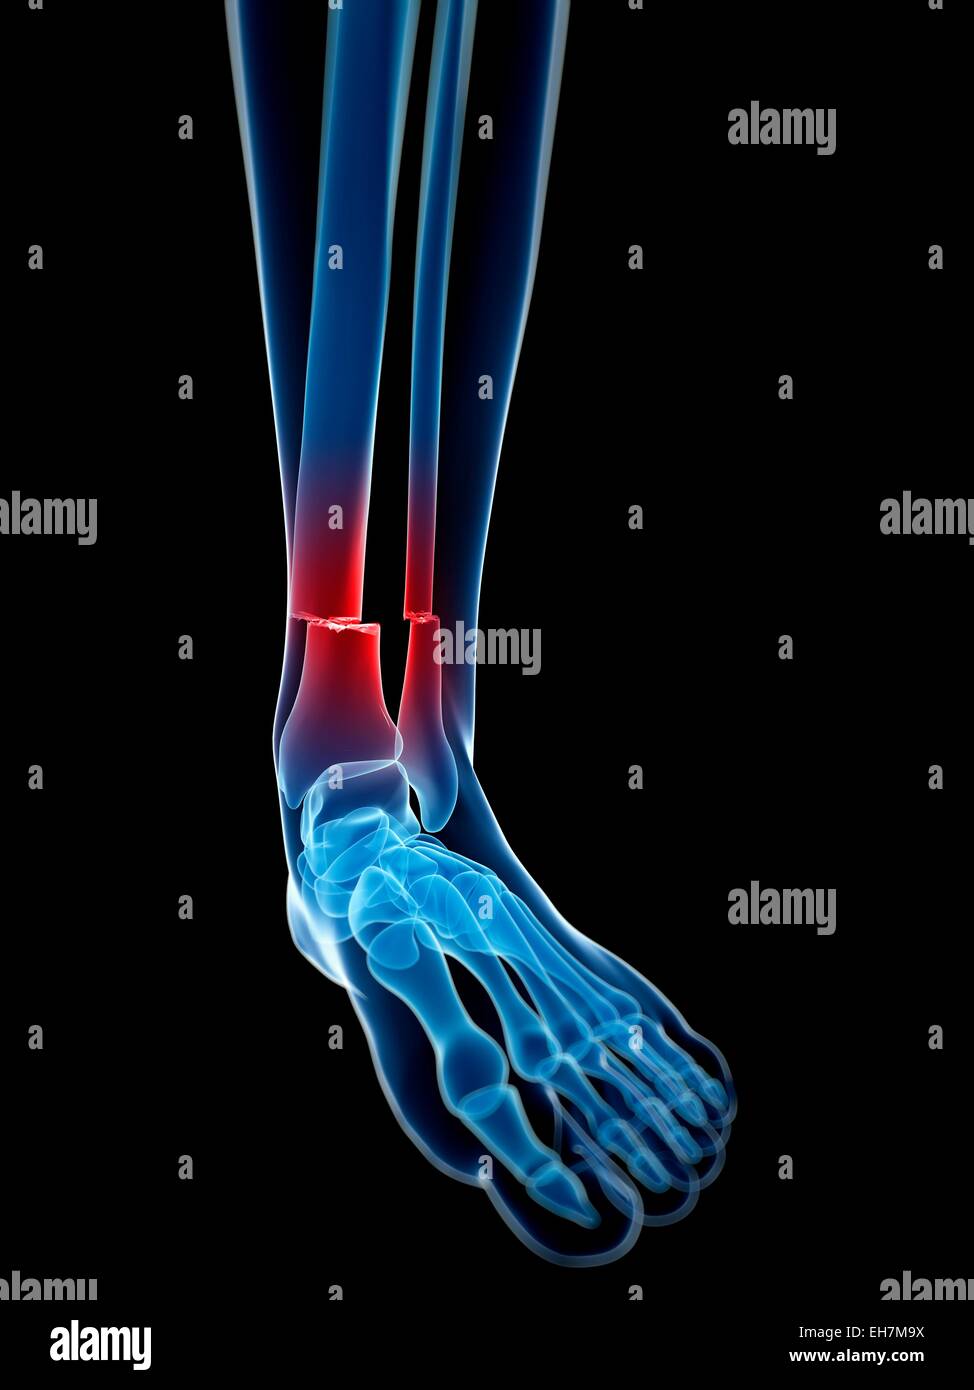 Broken leg bone, illustration Stock Photo - Alamy